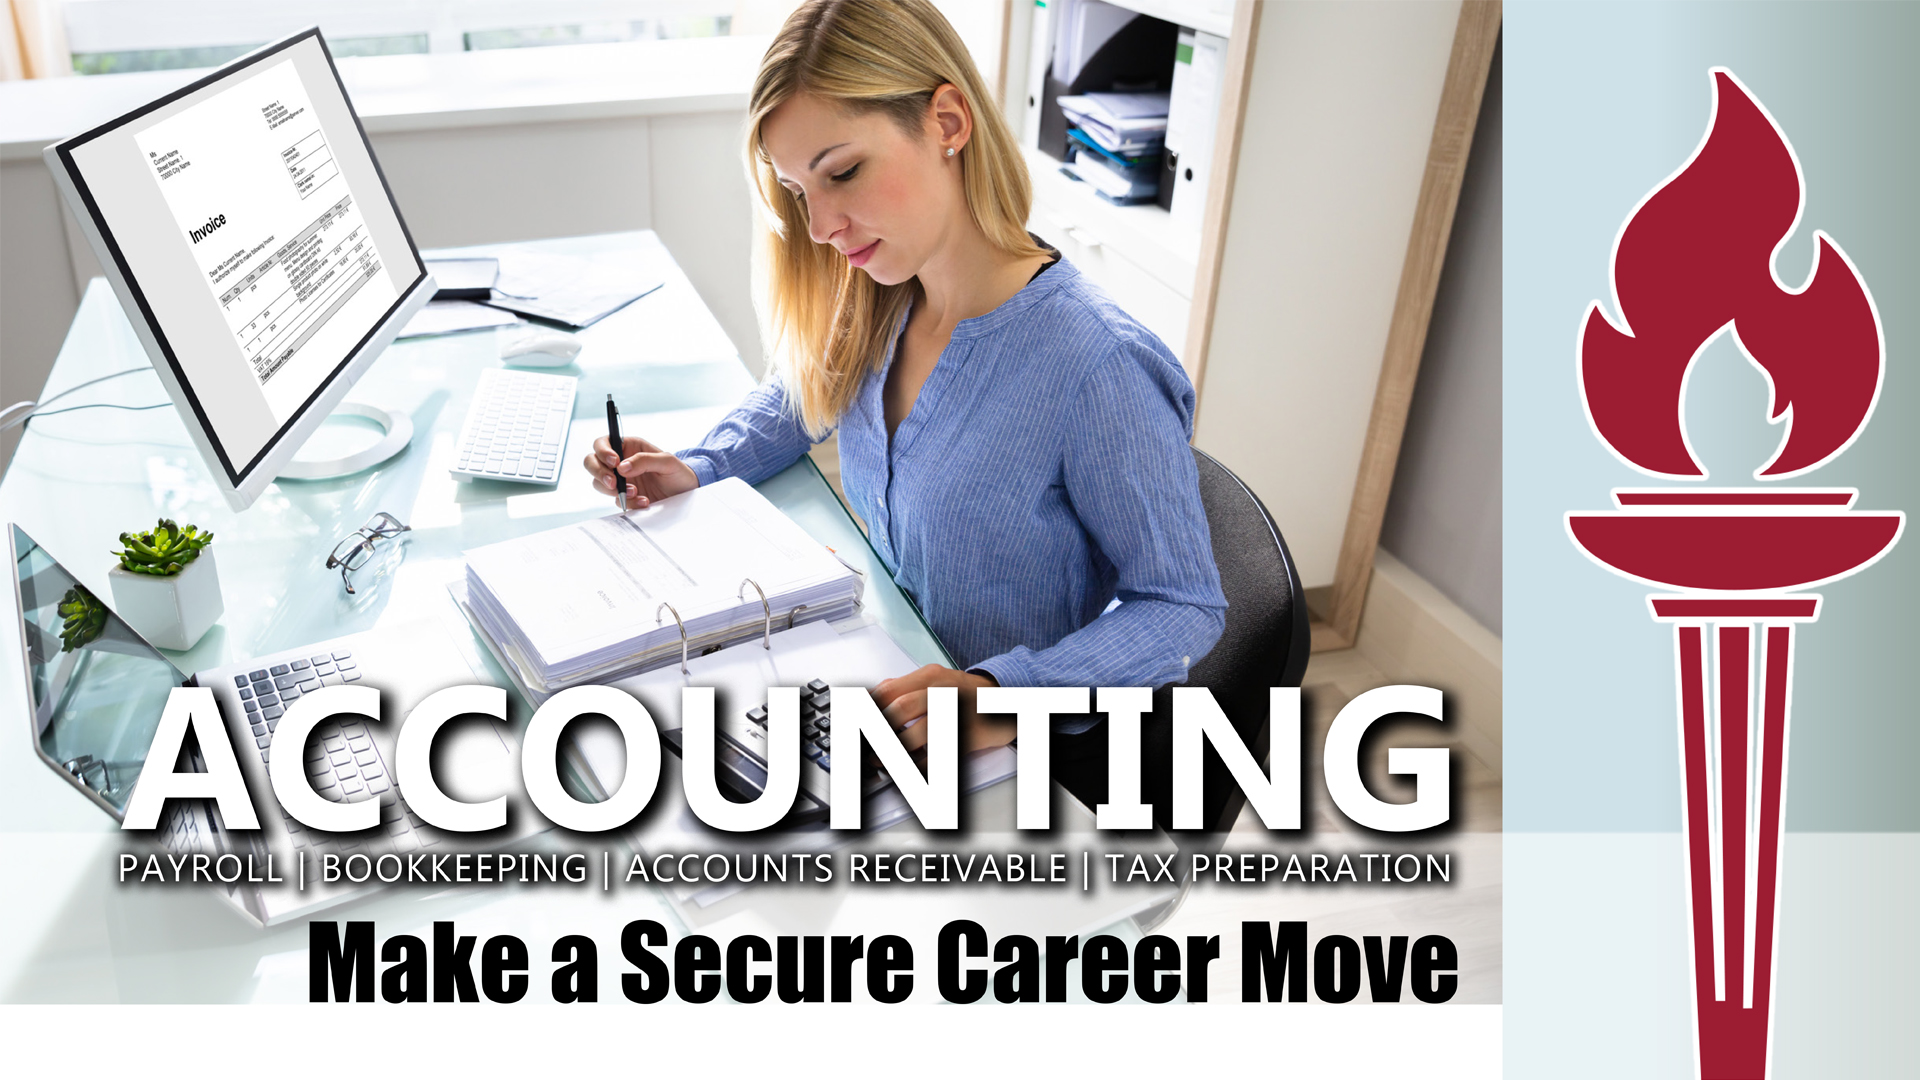 Accounting career central finance job vault